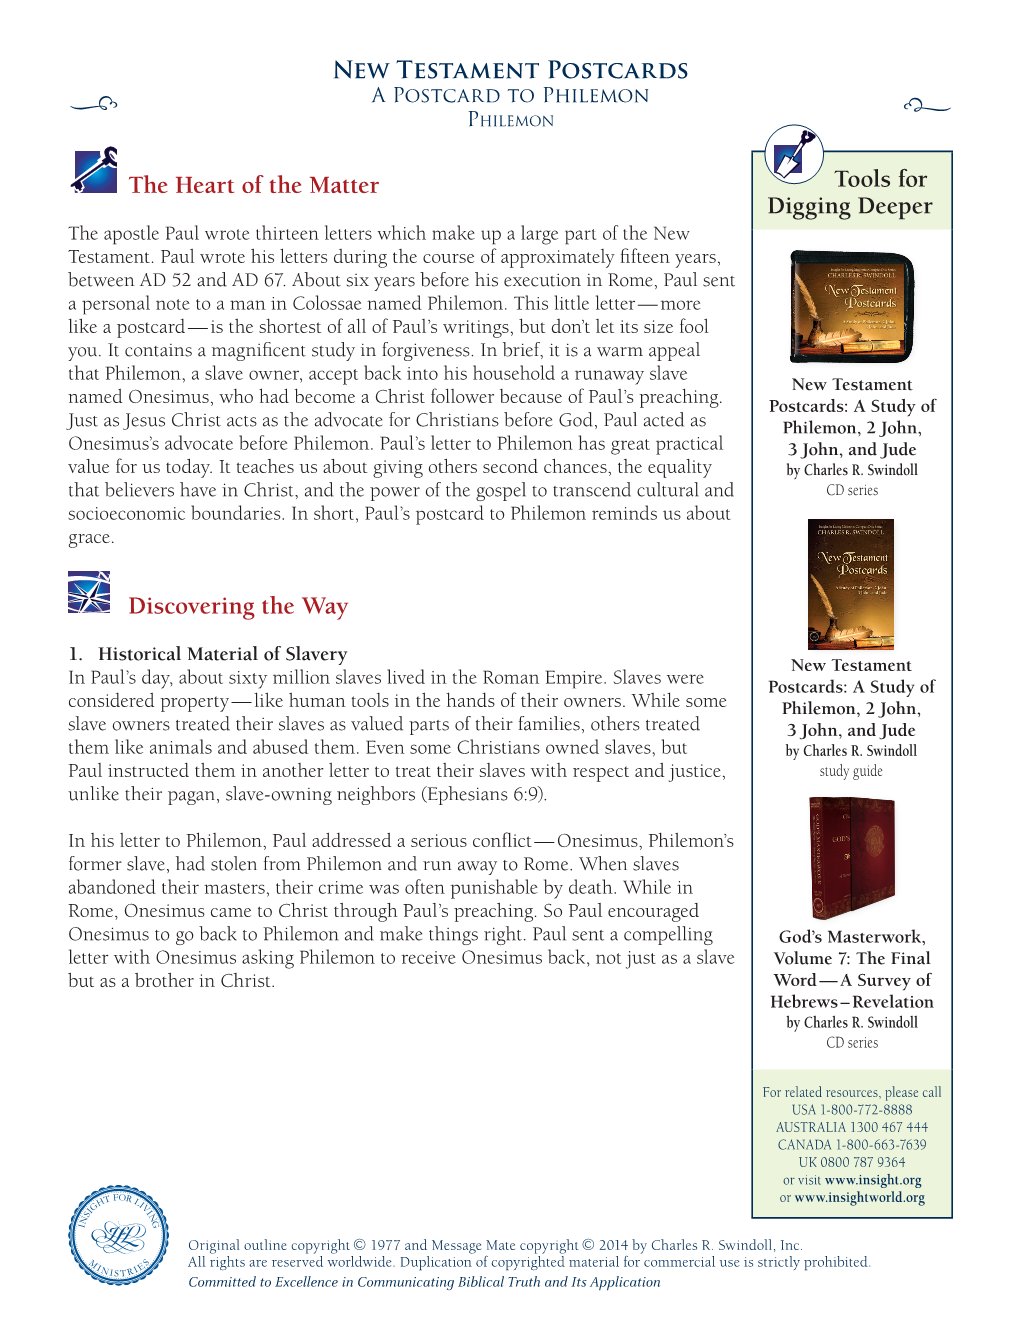 New Testament Postcards a Postcard to Philemon J Philemon I